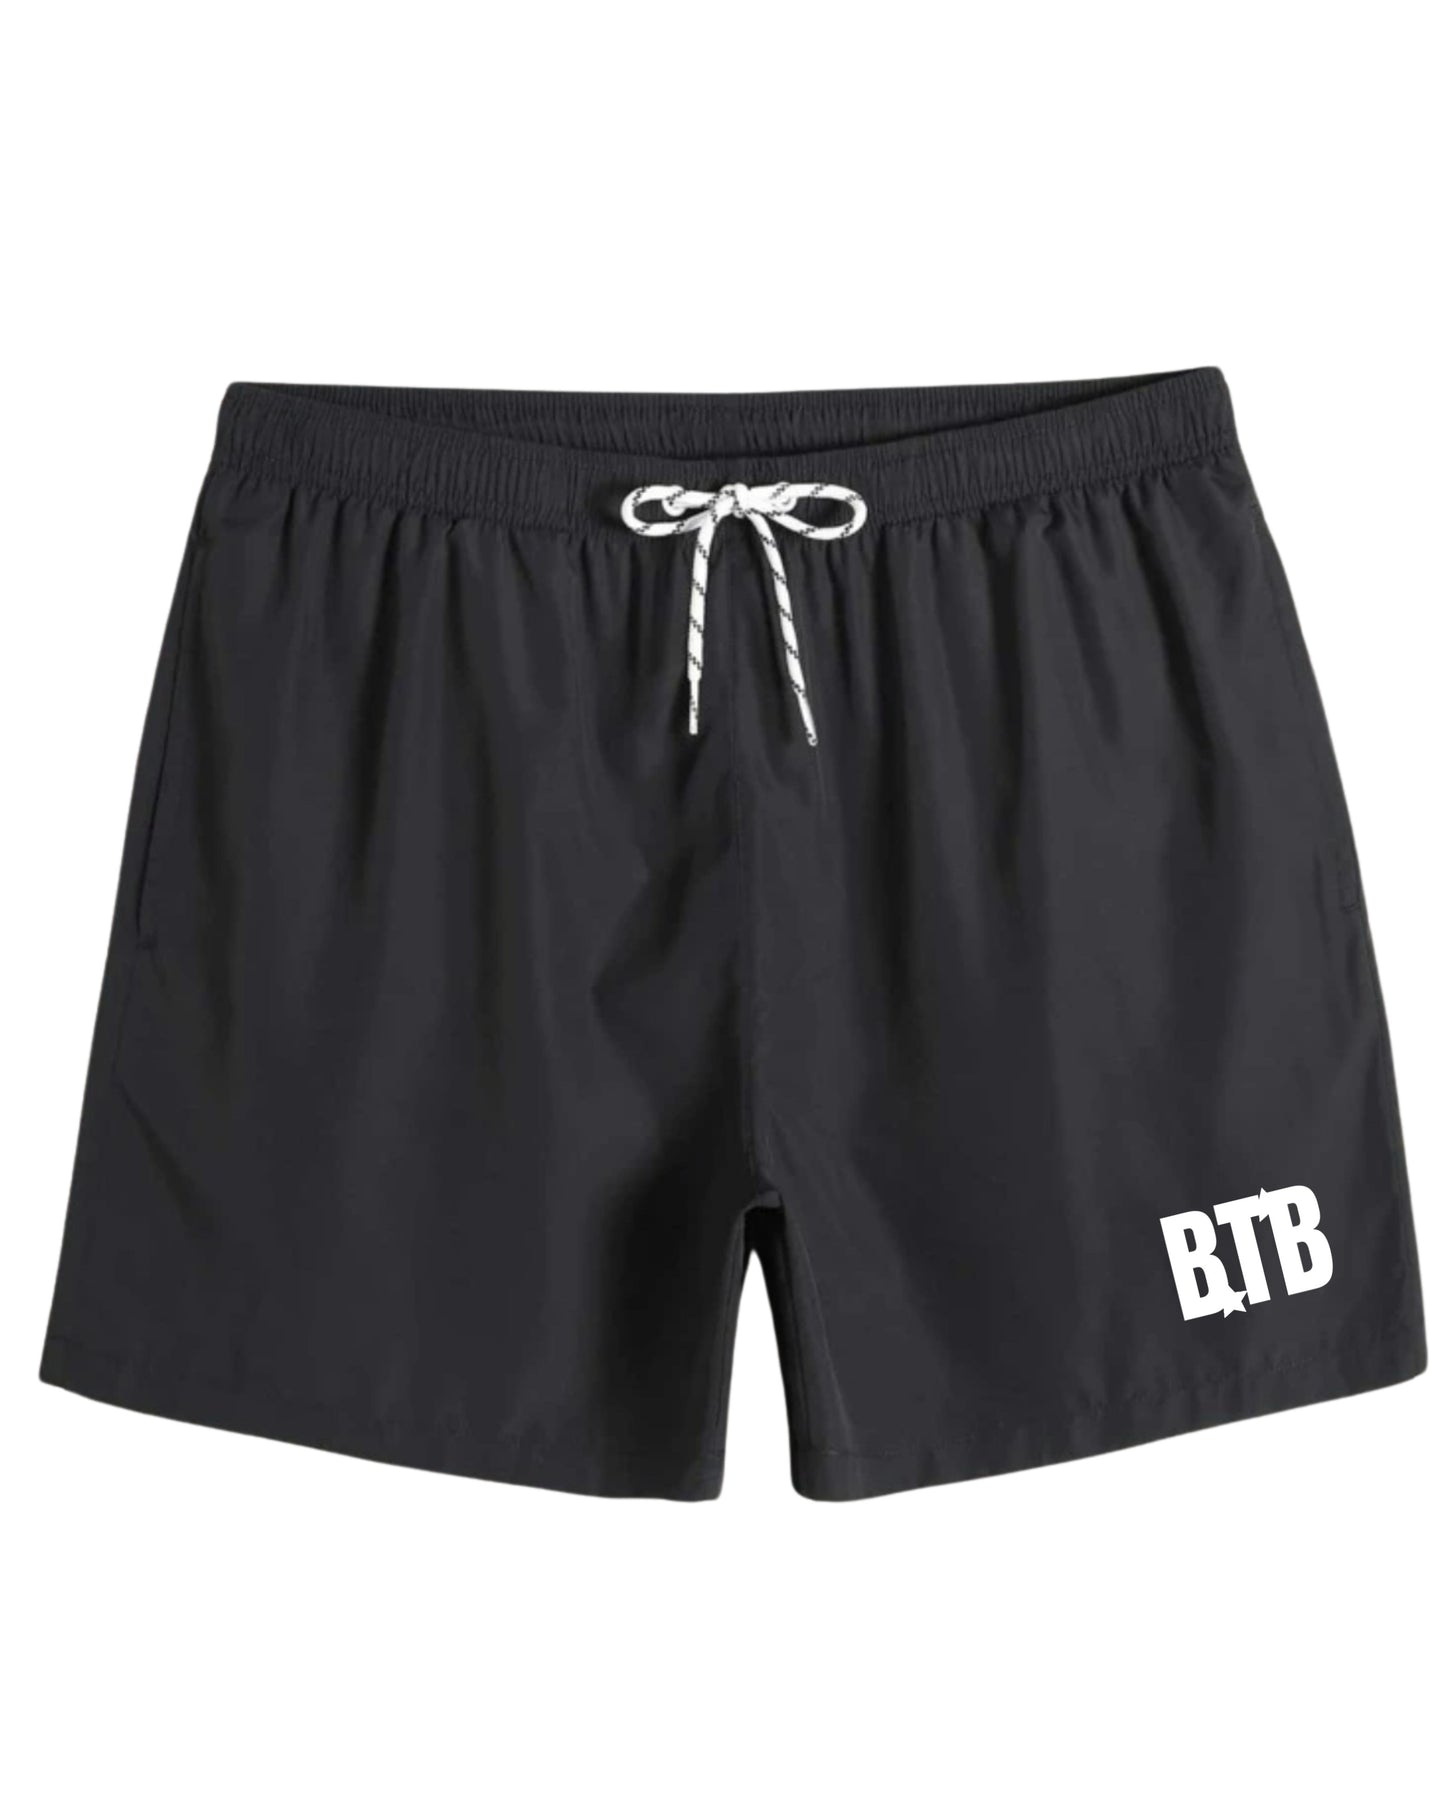 BTB Statement Swim Shorts